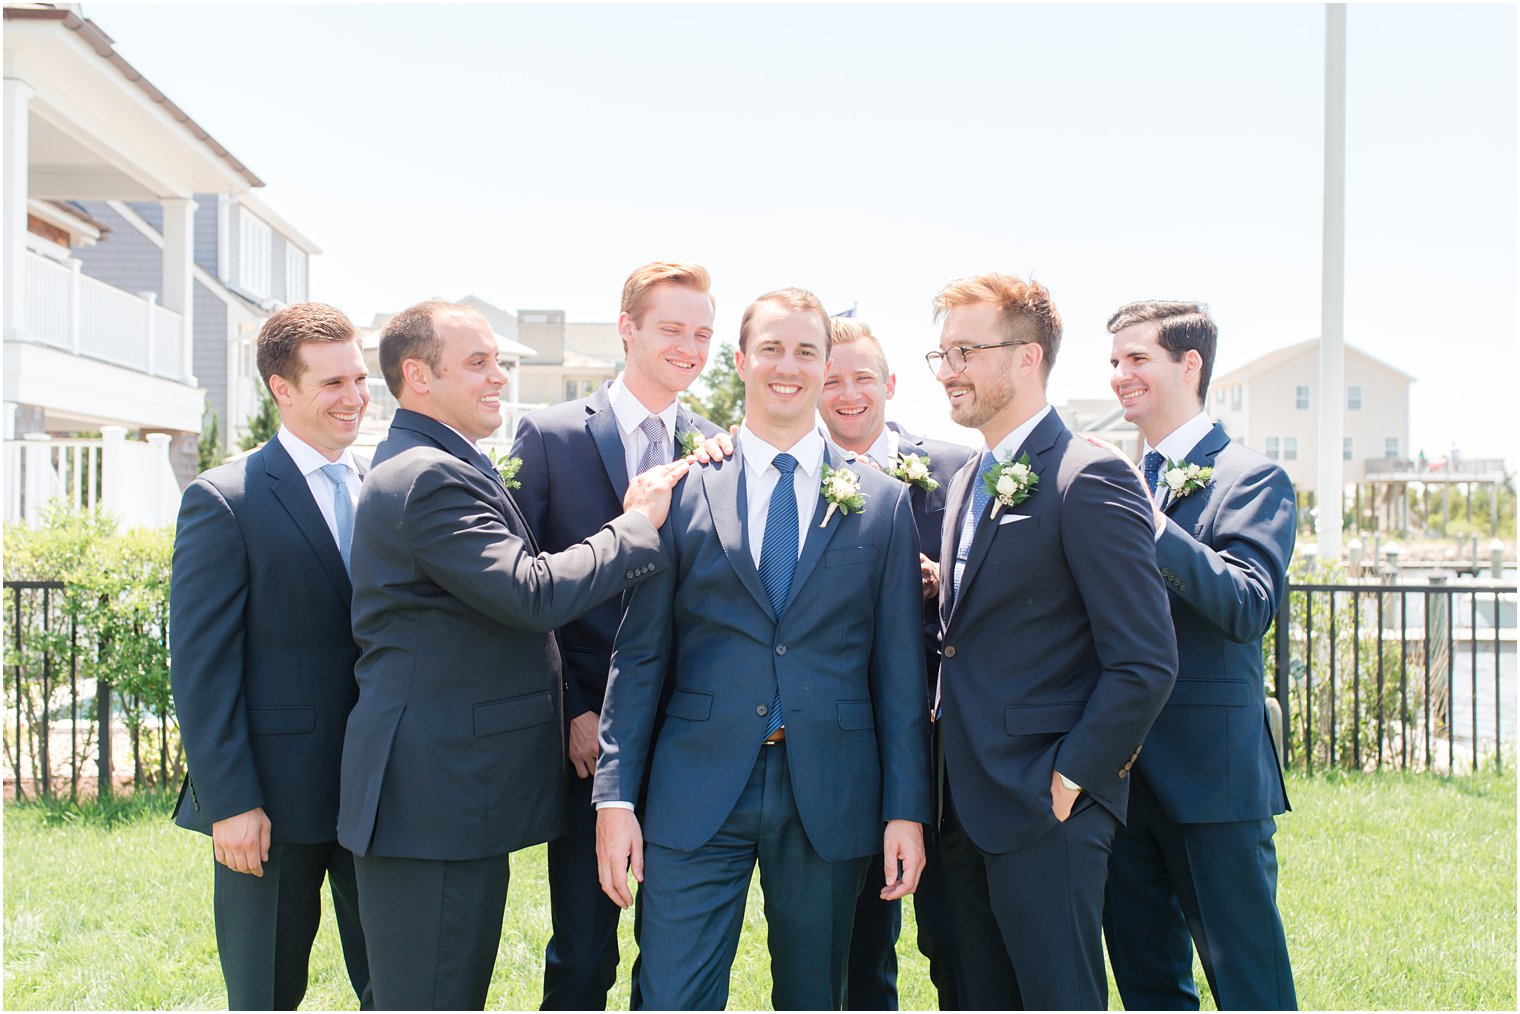 groom poses with six groomsmen in navy suits